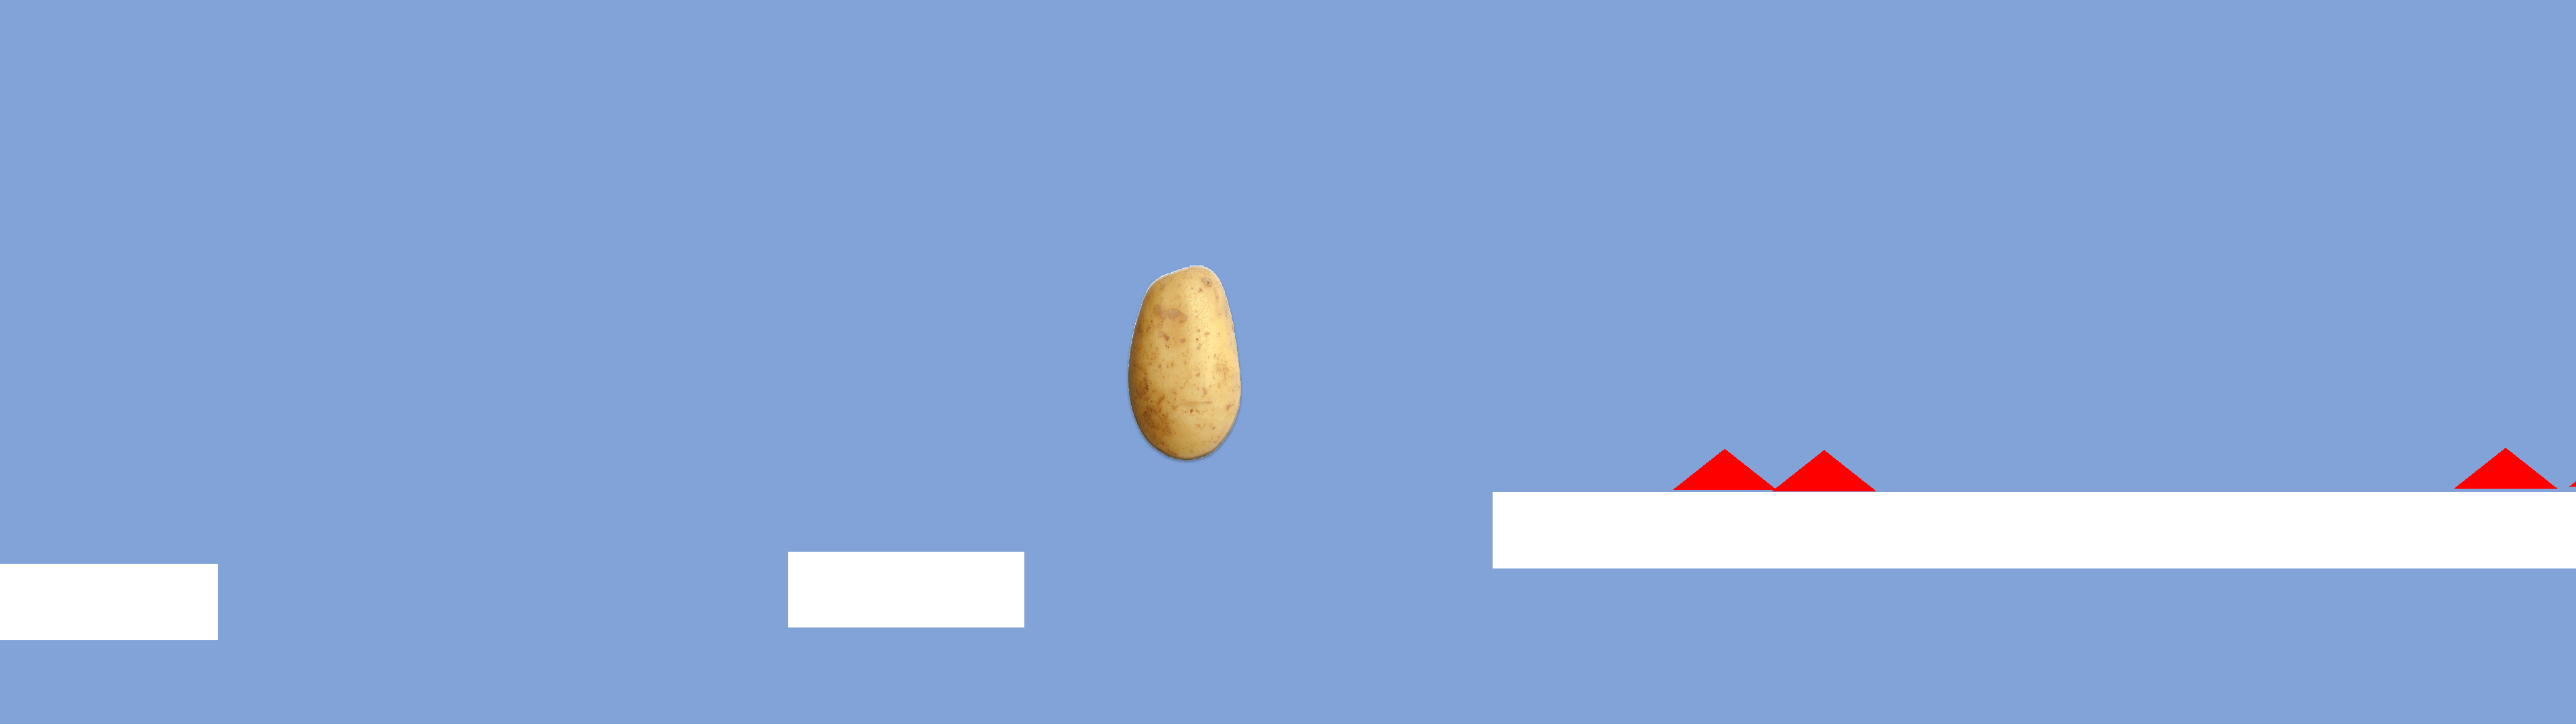 Potato Jumper